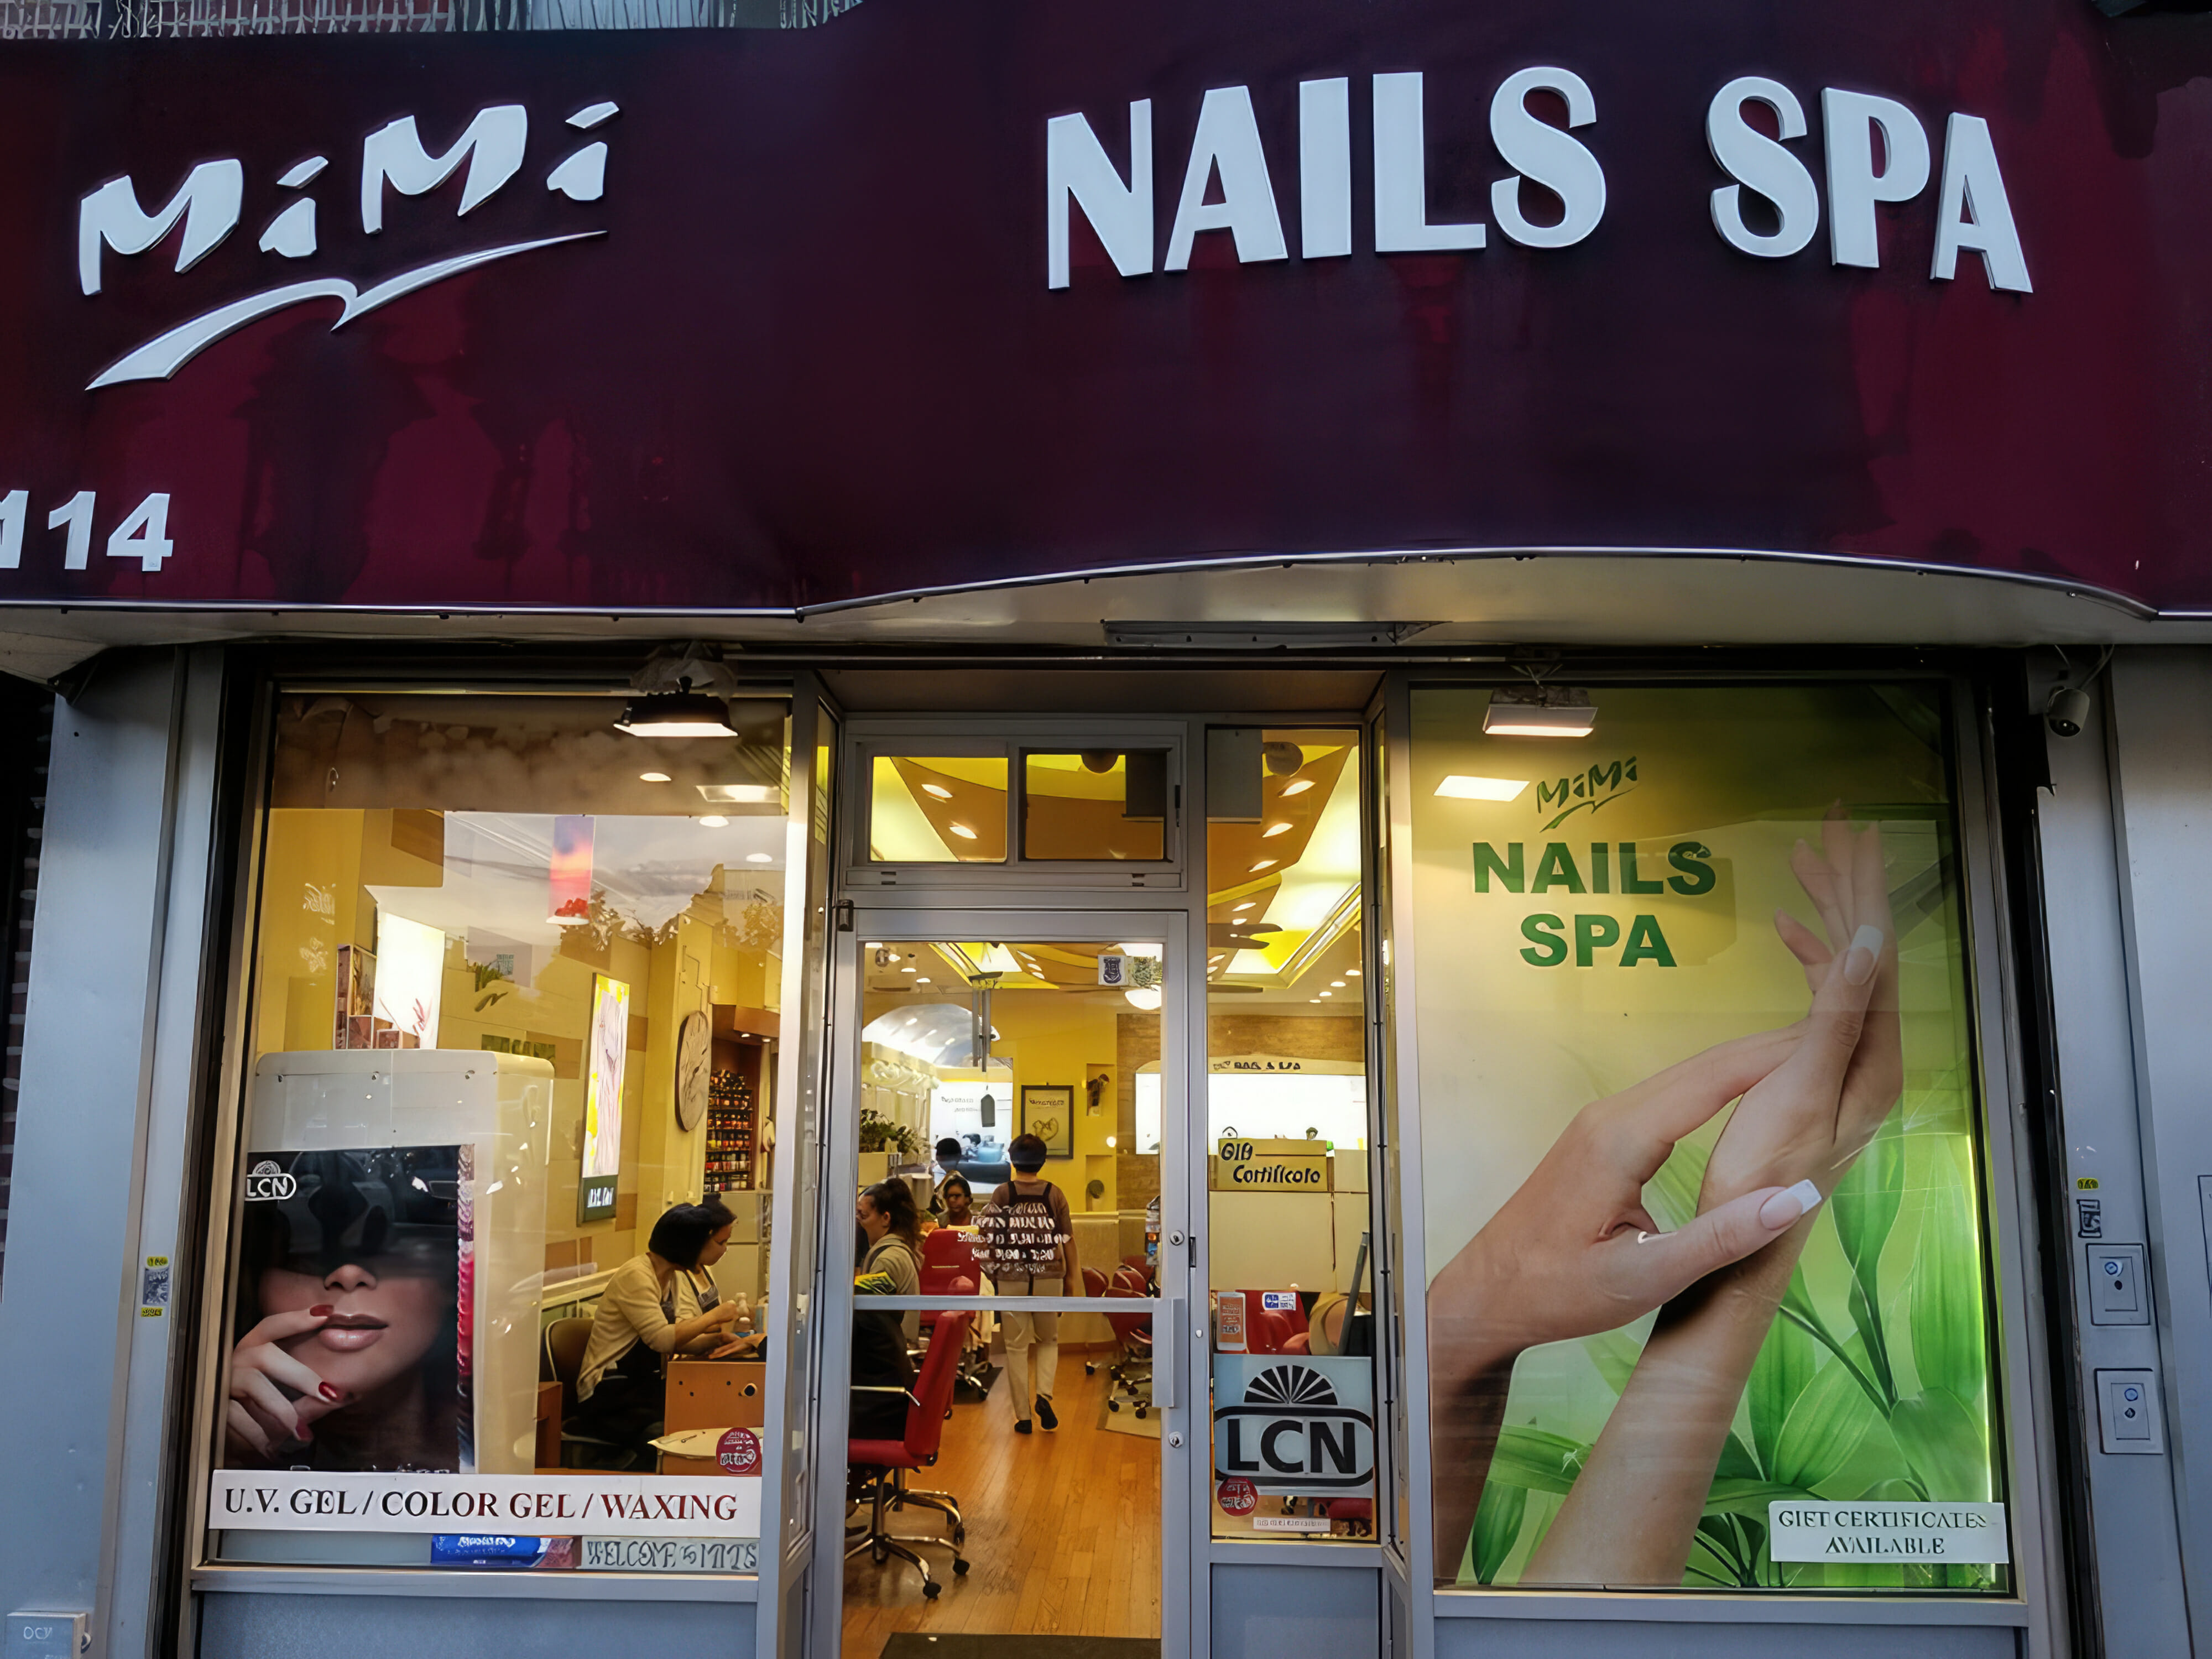 Mimi's Nail Spa exterior